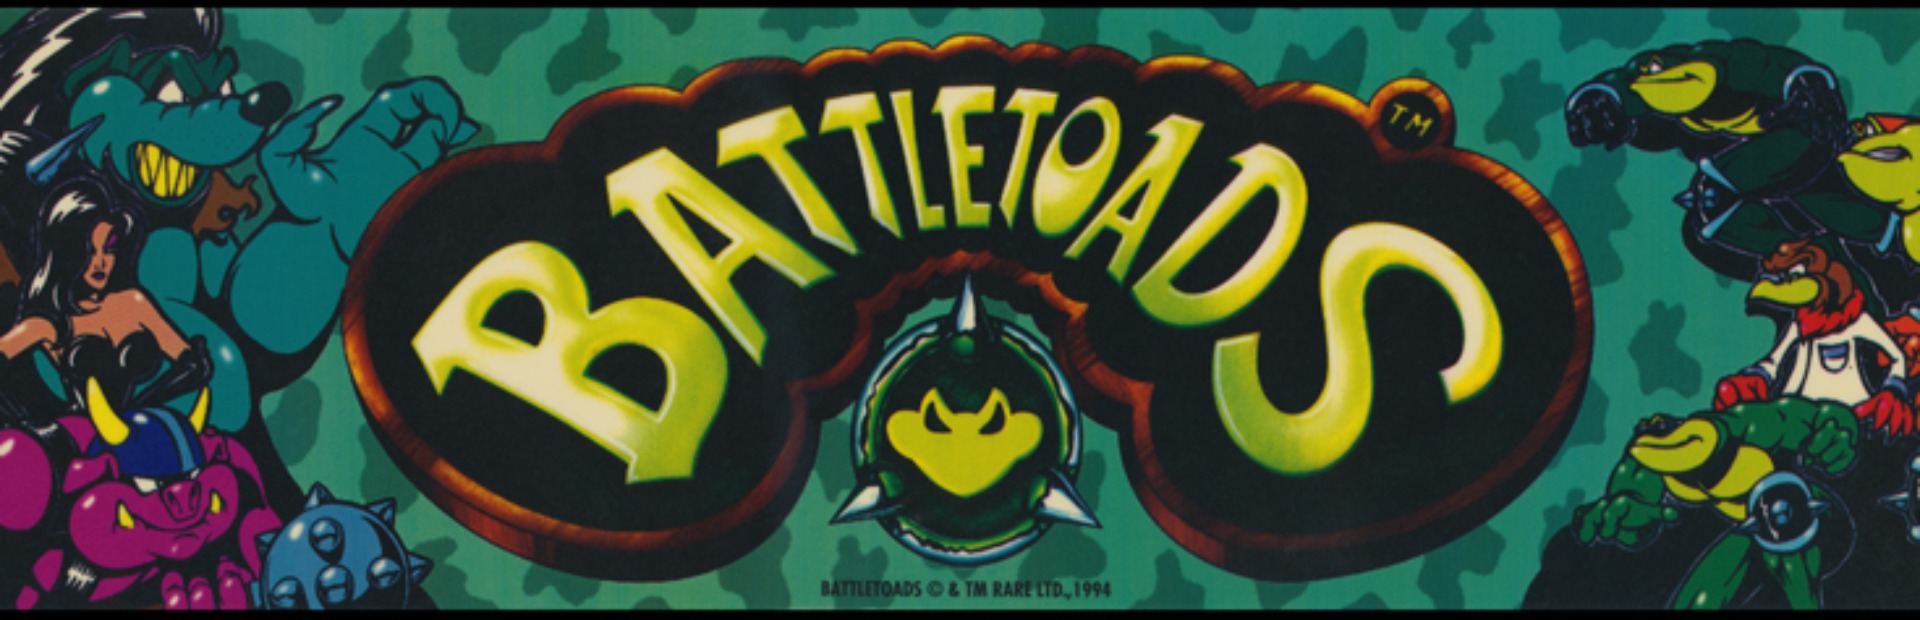 Battletoads remastered. Батлтоадс Раш. Battletoads Arcade. Игровой автомат Battletoads.